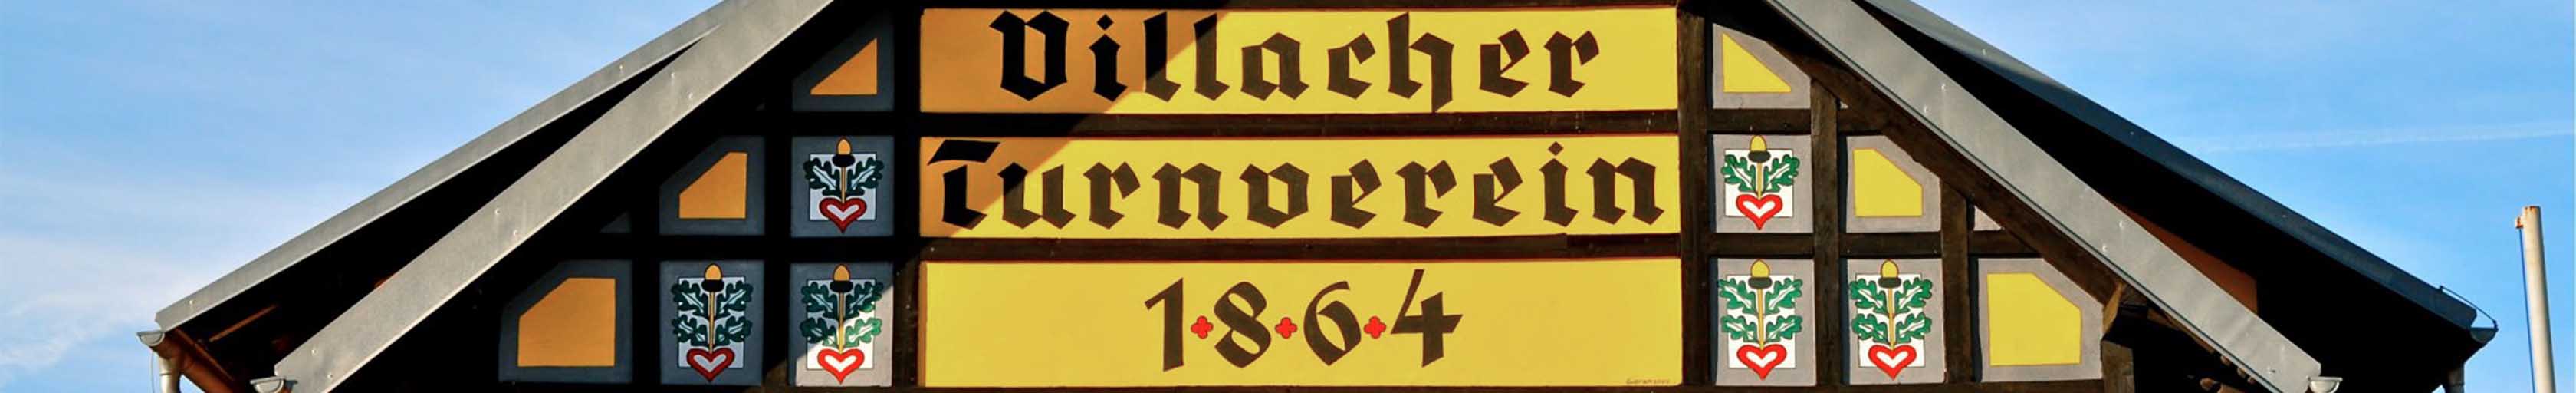 Villacher Turnverein Title Image